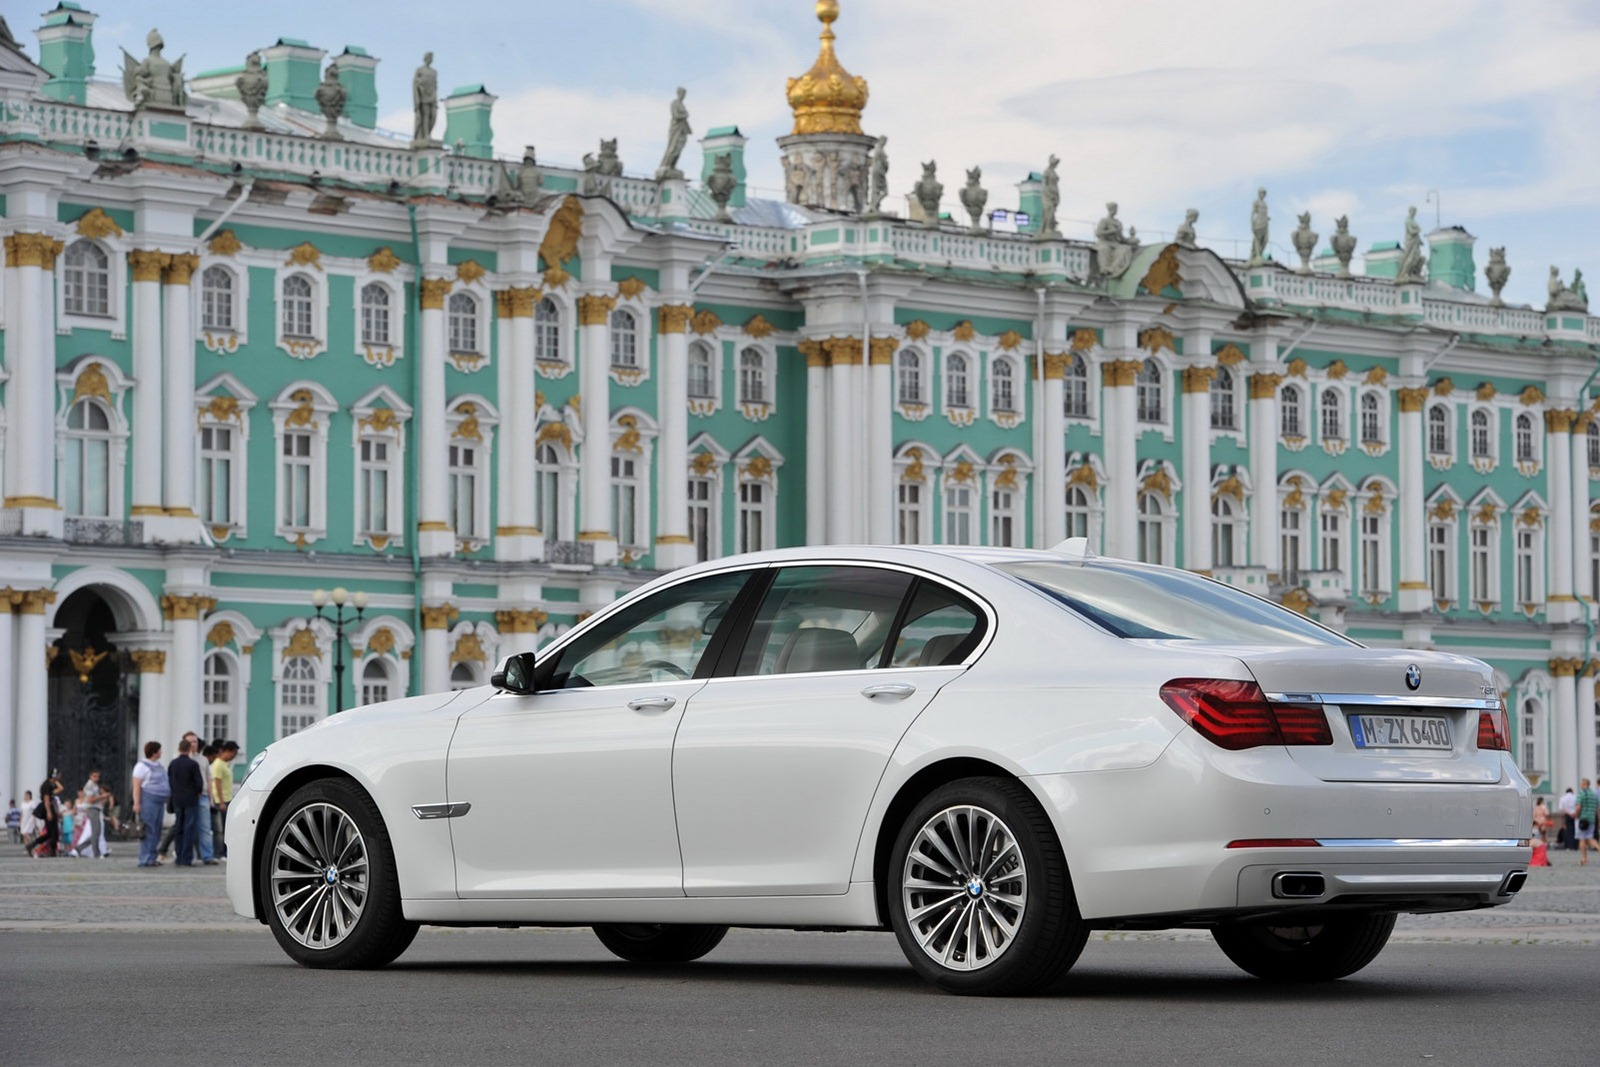 BMW 7 Series saloon - third generation BMW 7 Series, E38 (06/2015).